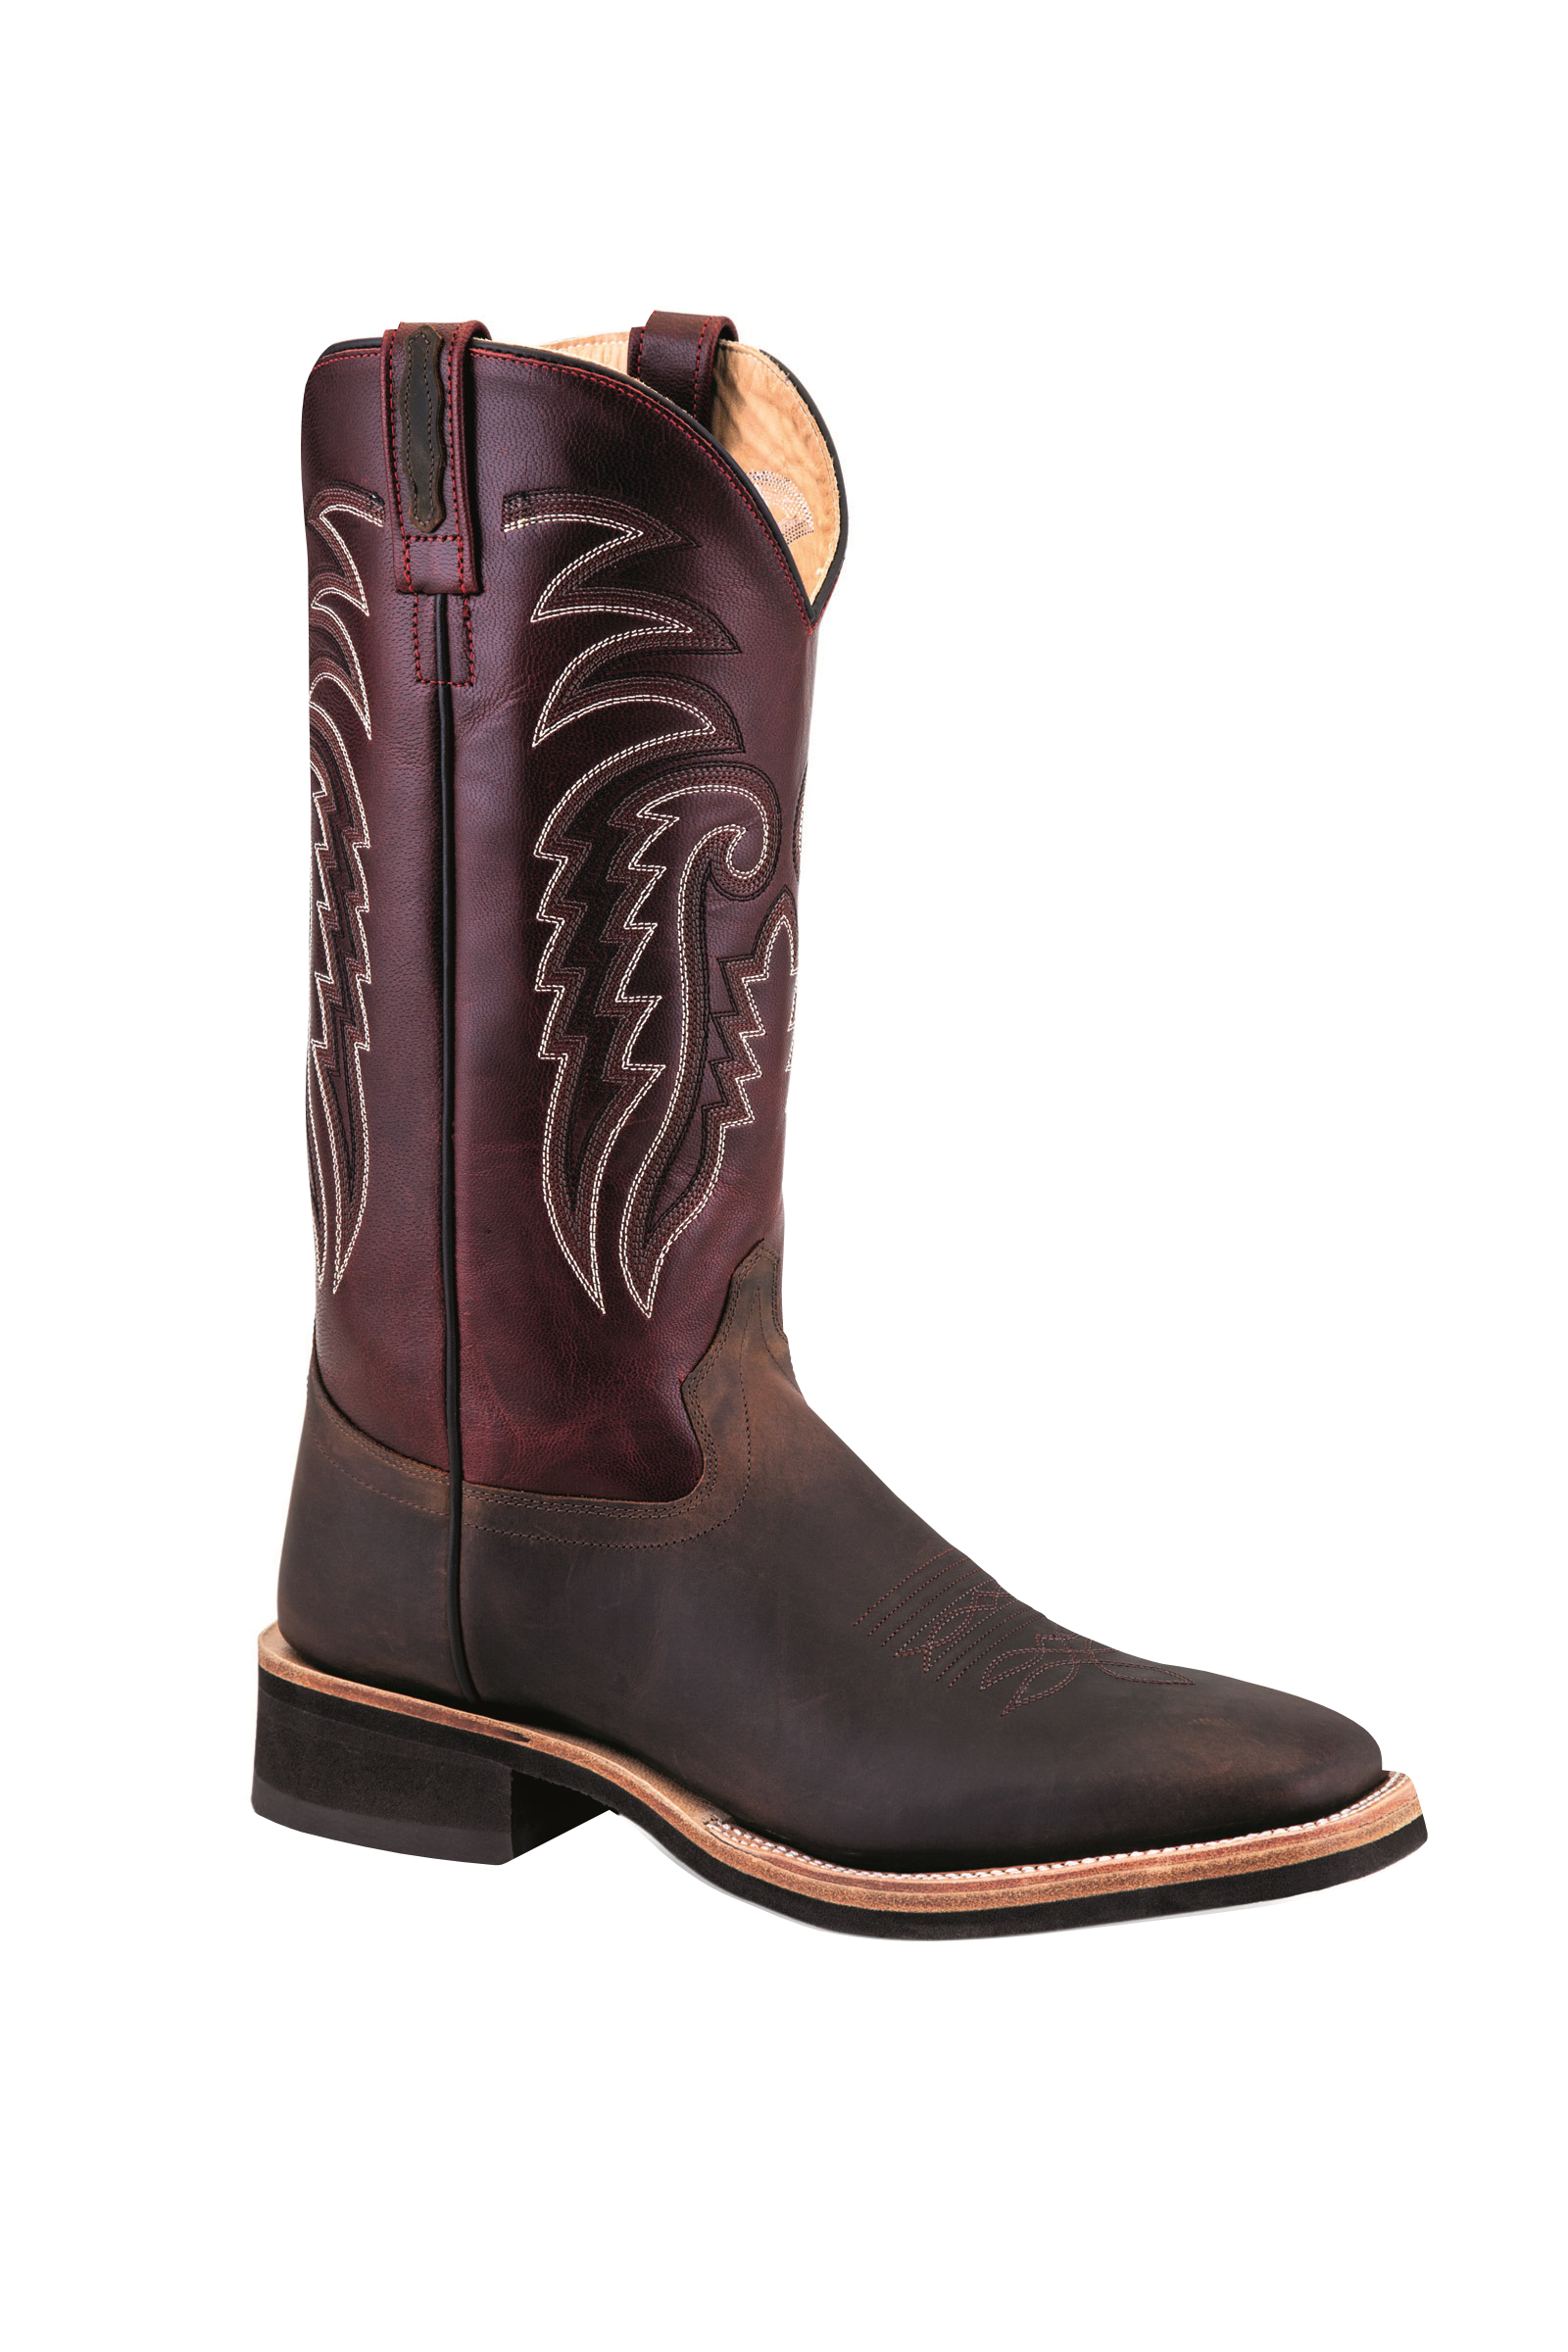 Cowboy boots men BSM1866, brown-red